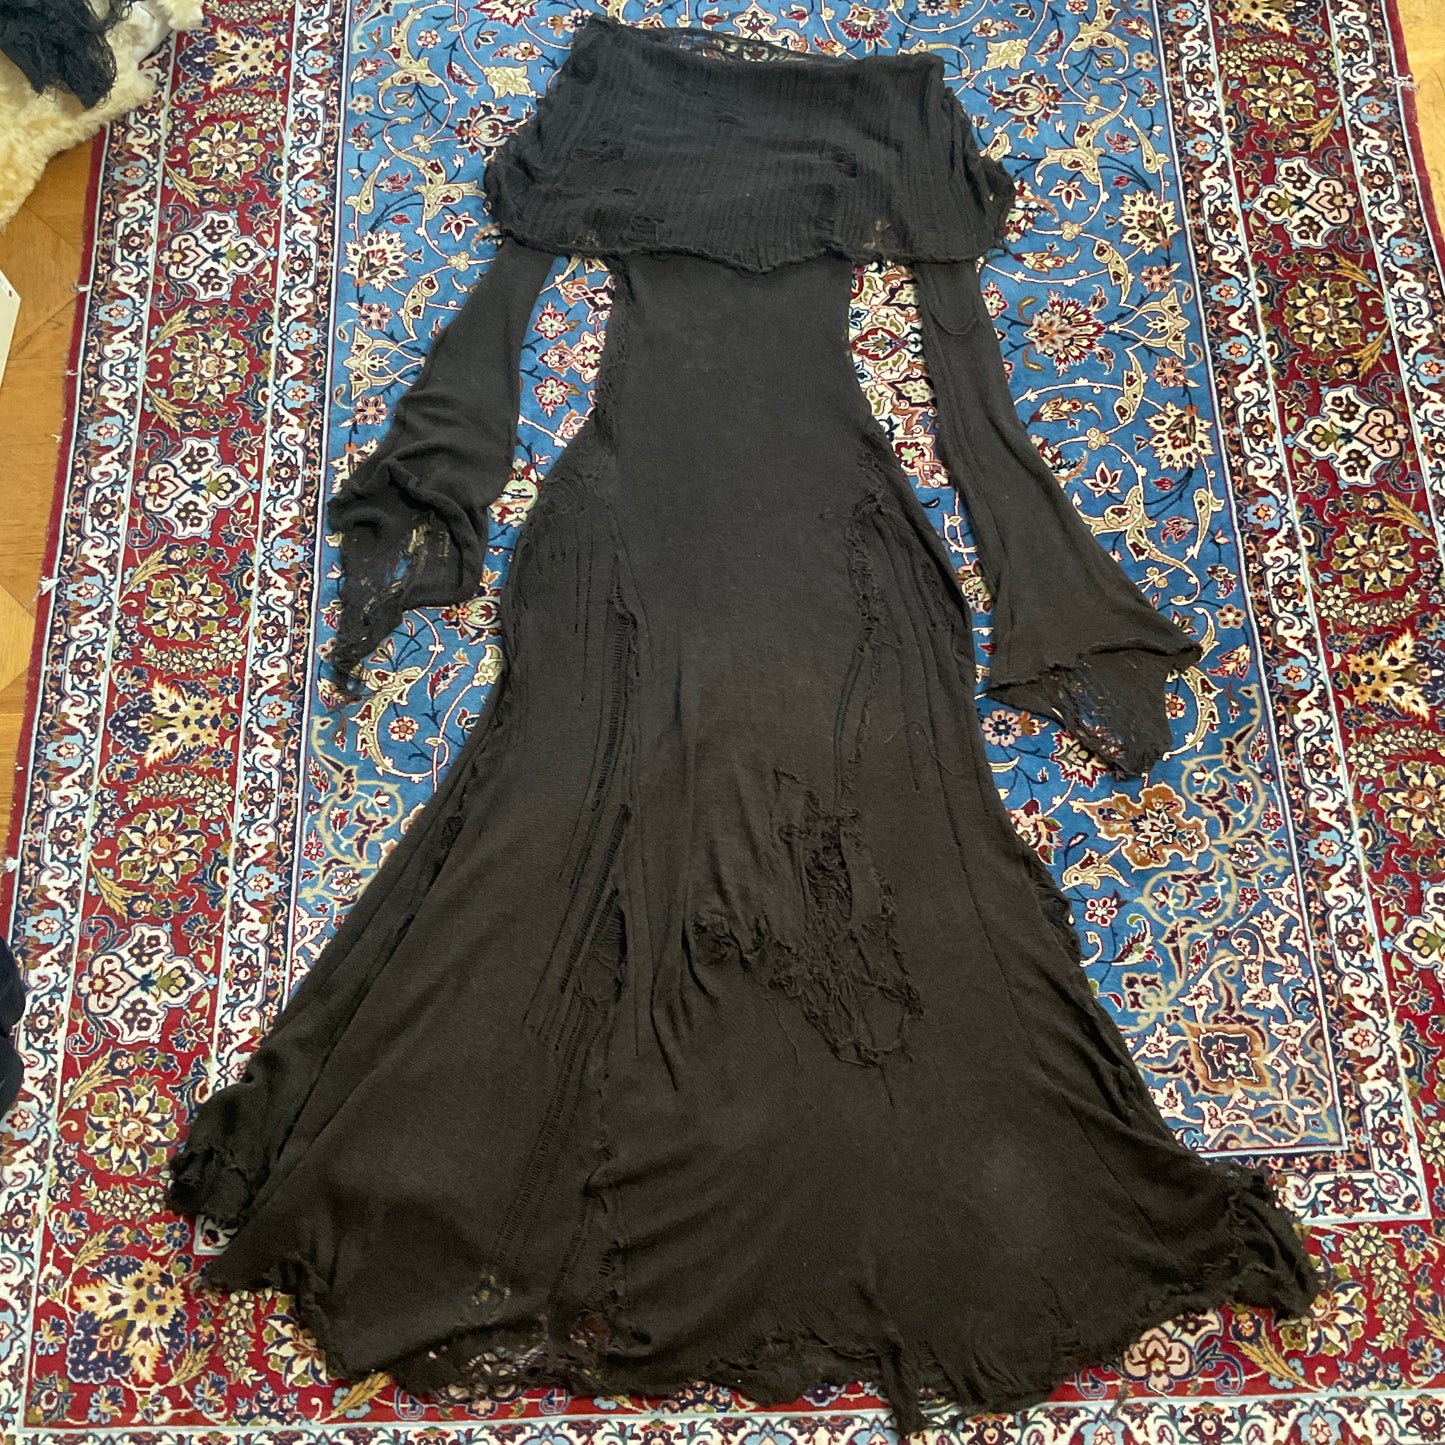 gargarox ~ dark brown monk dress